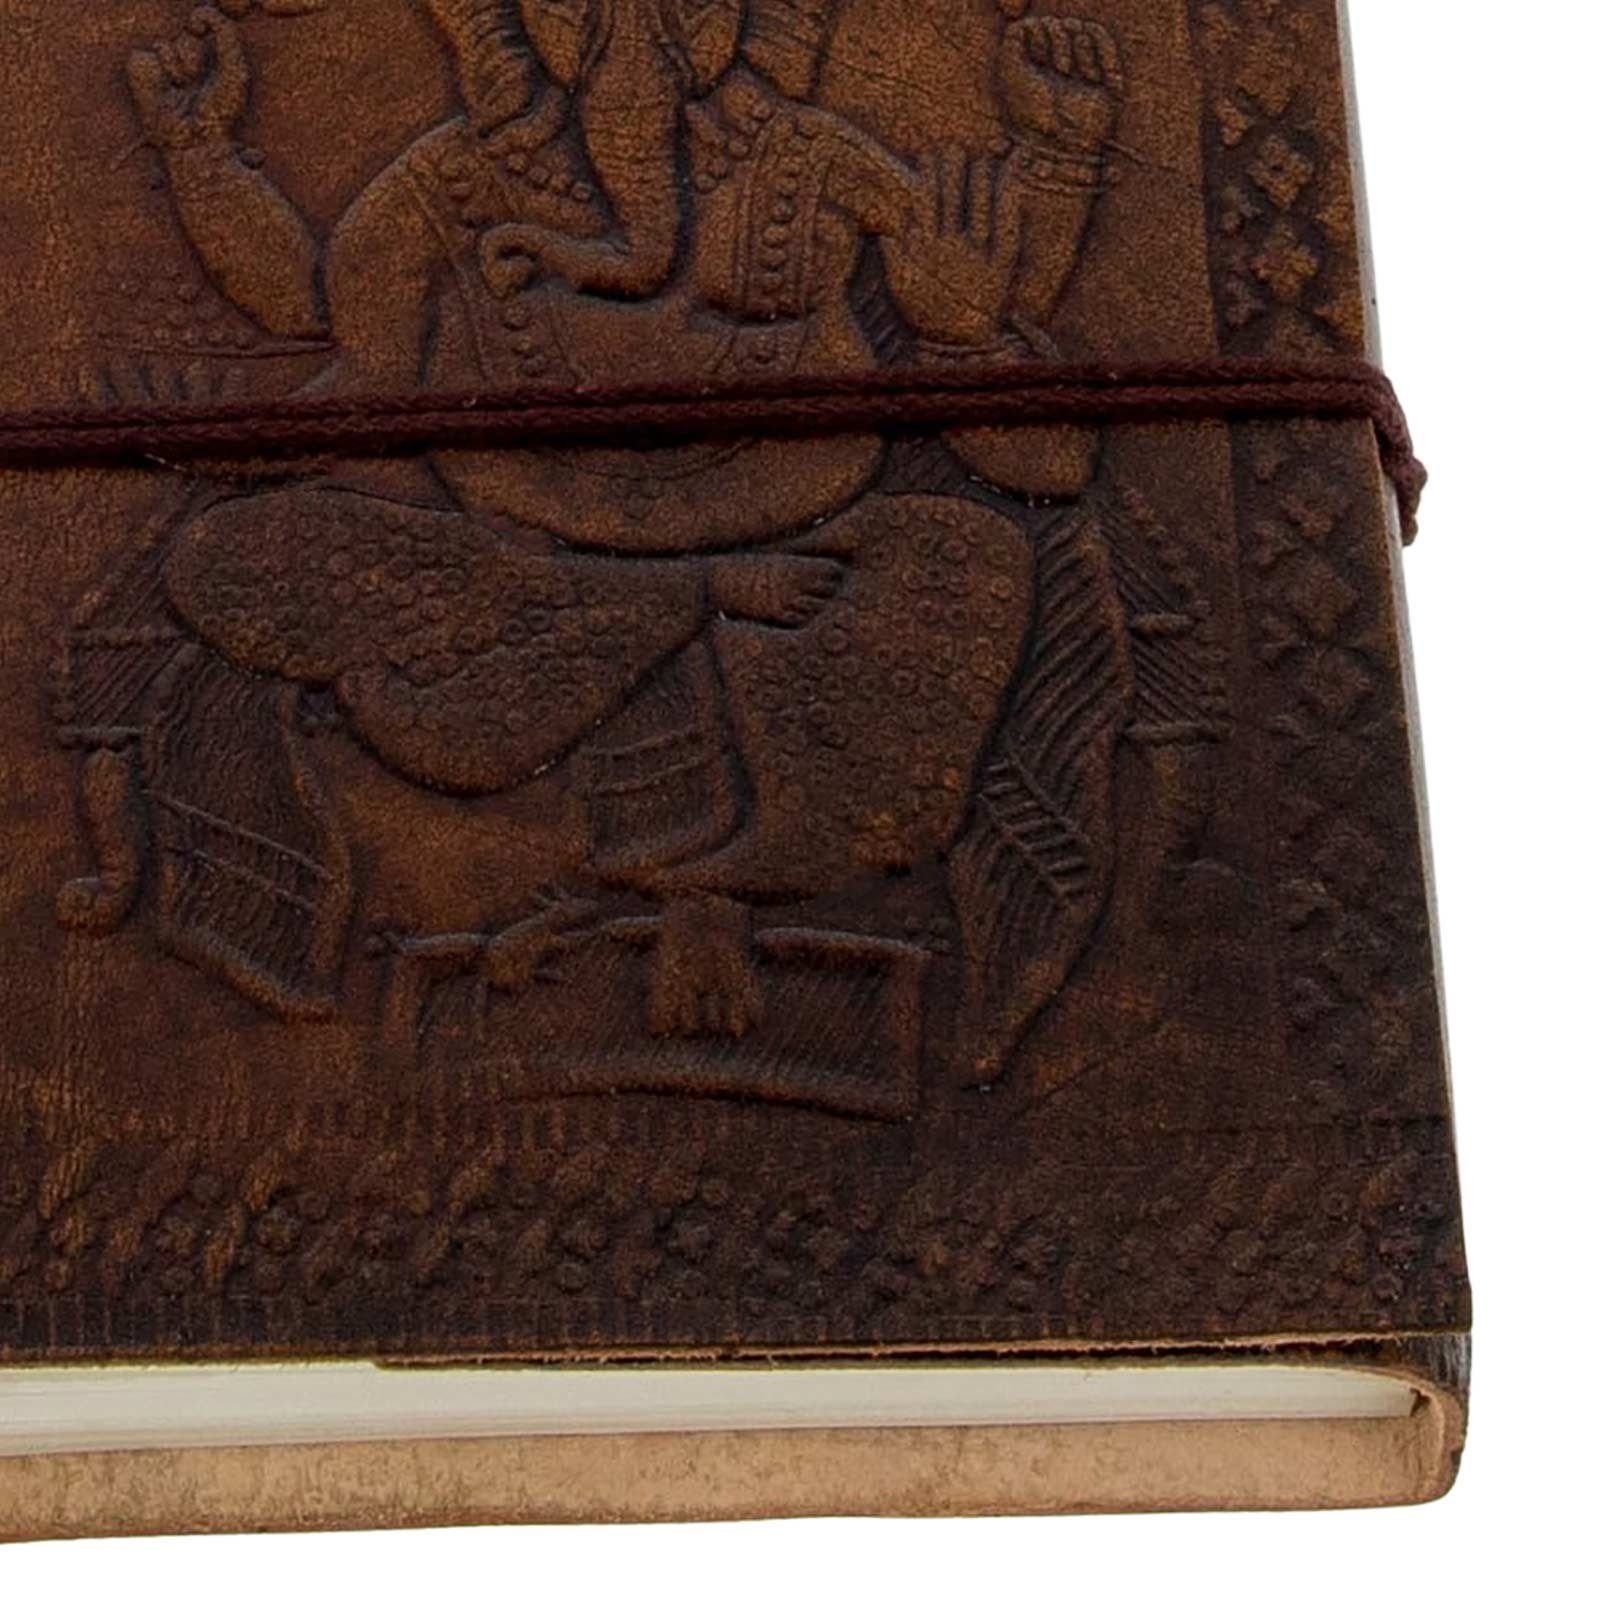 KUNST UND Tagebuch Lord Notizbuch Leder Tagebuch MAGIE 11,5x15cm handgefertigt Ganesha